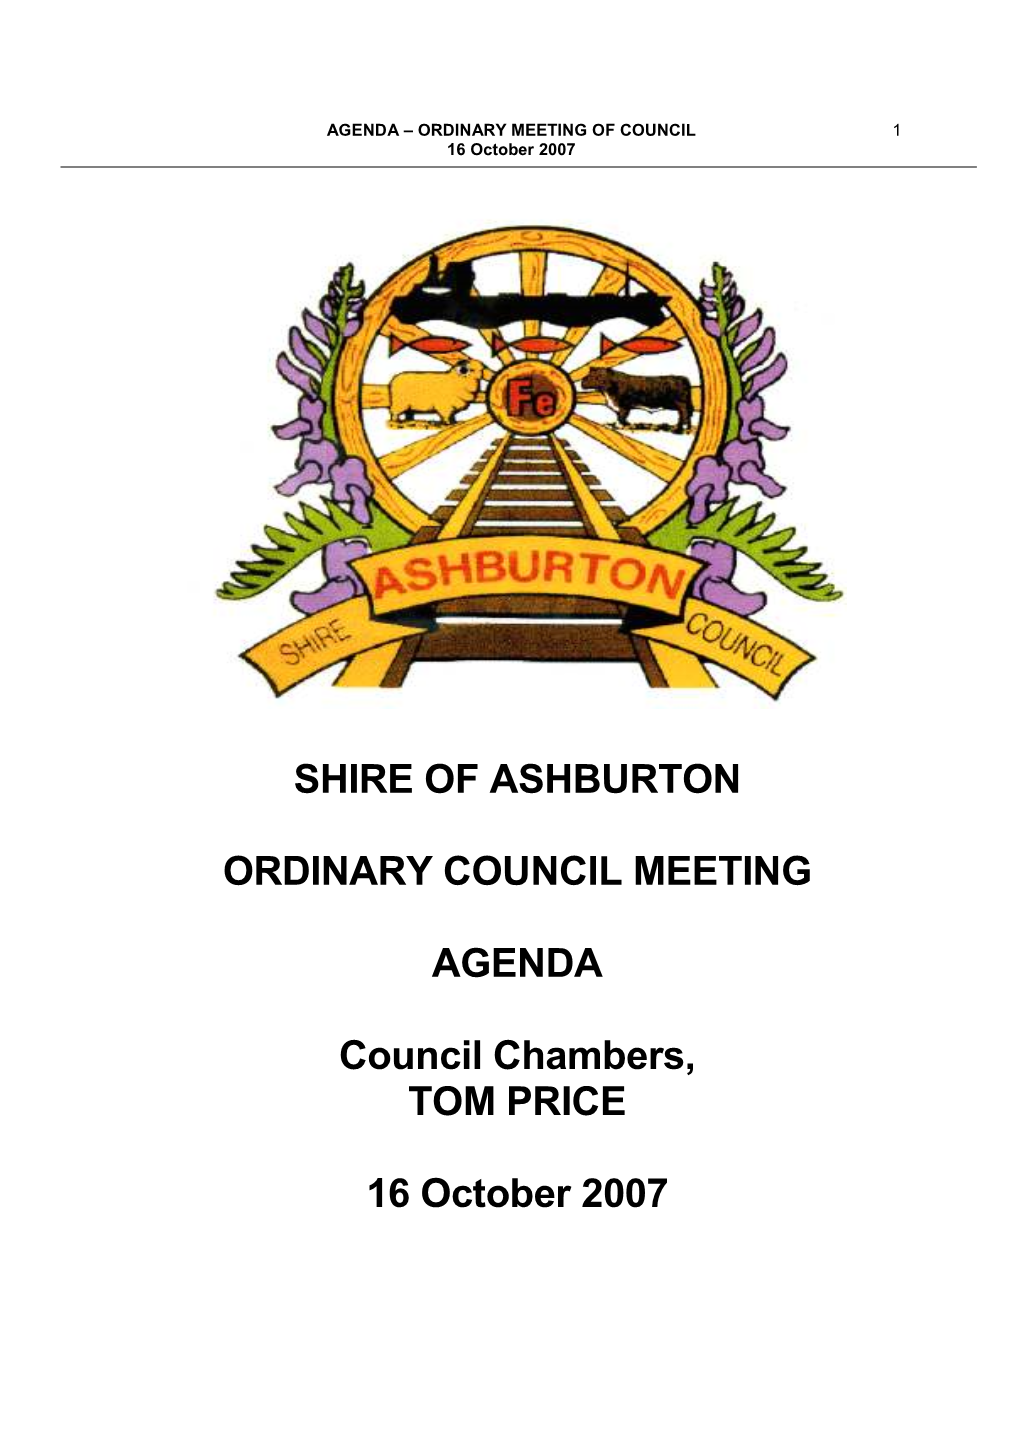 Shire of Ashburton Ordinary Council Meeting Agenda